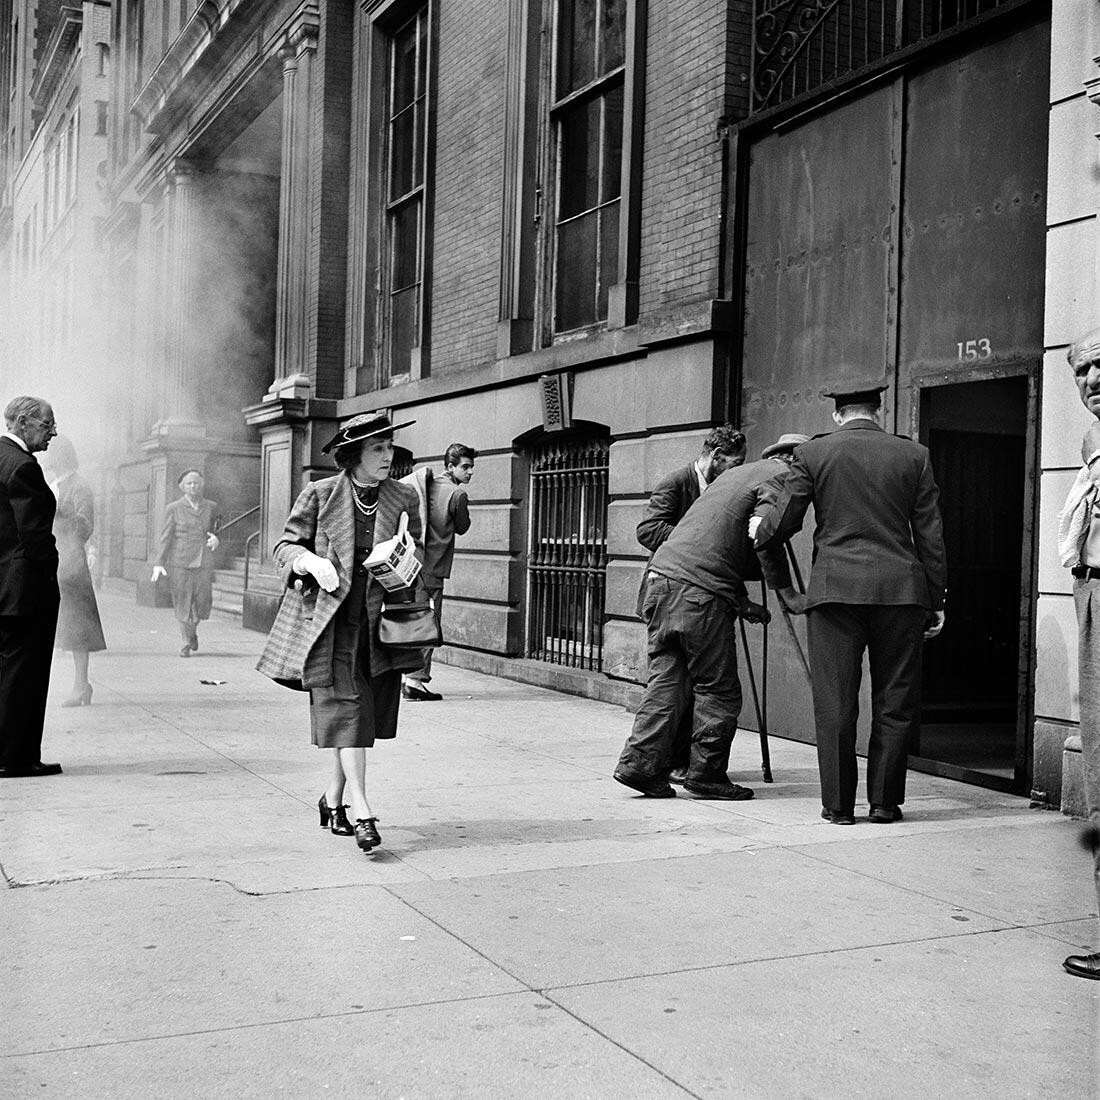 Осень 1953 года, Нью-Йорк, штат Нью-Йорк. Фотограф Вивиан Майер